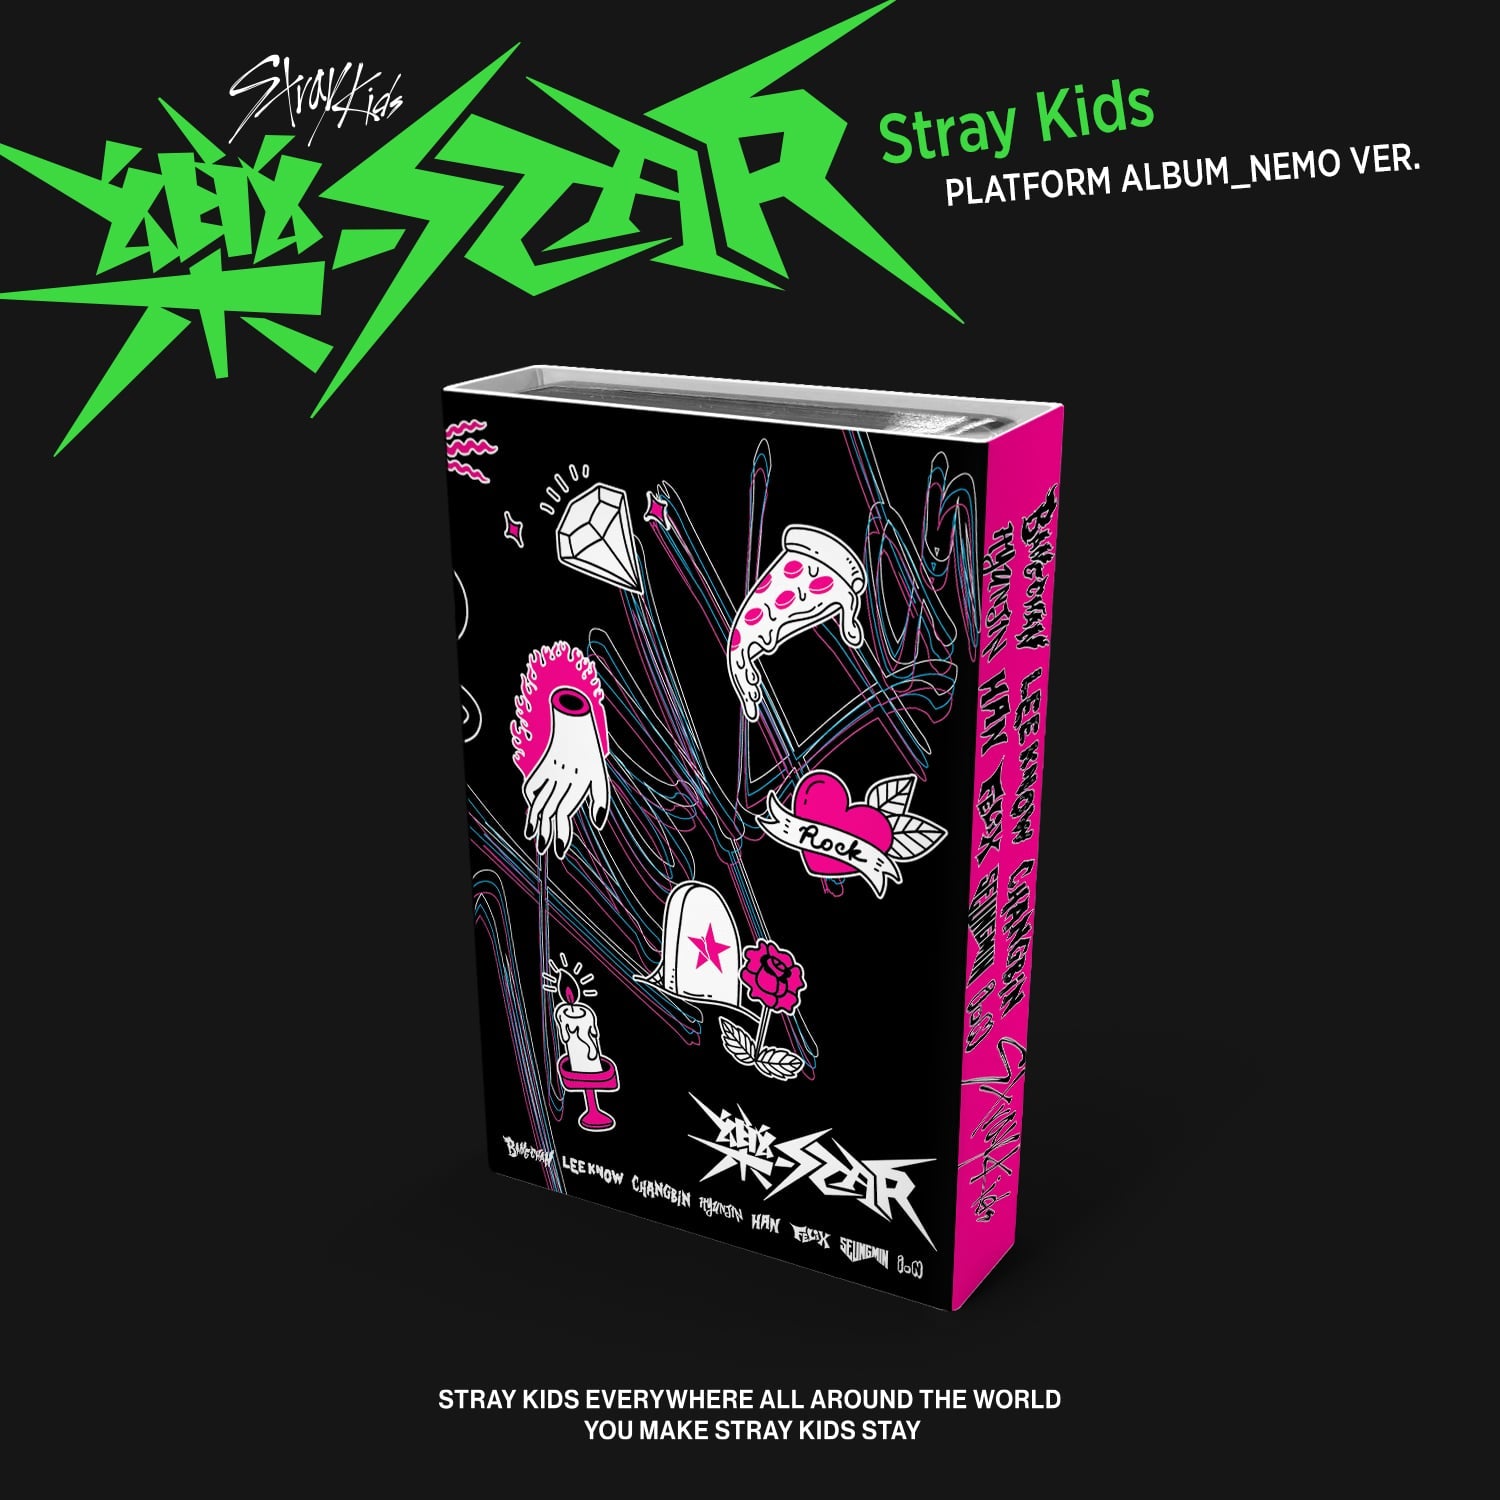 Stray Kids - 樂-STAR (PLATFORM ALBUM - NEMO VER)